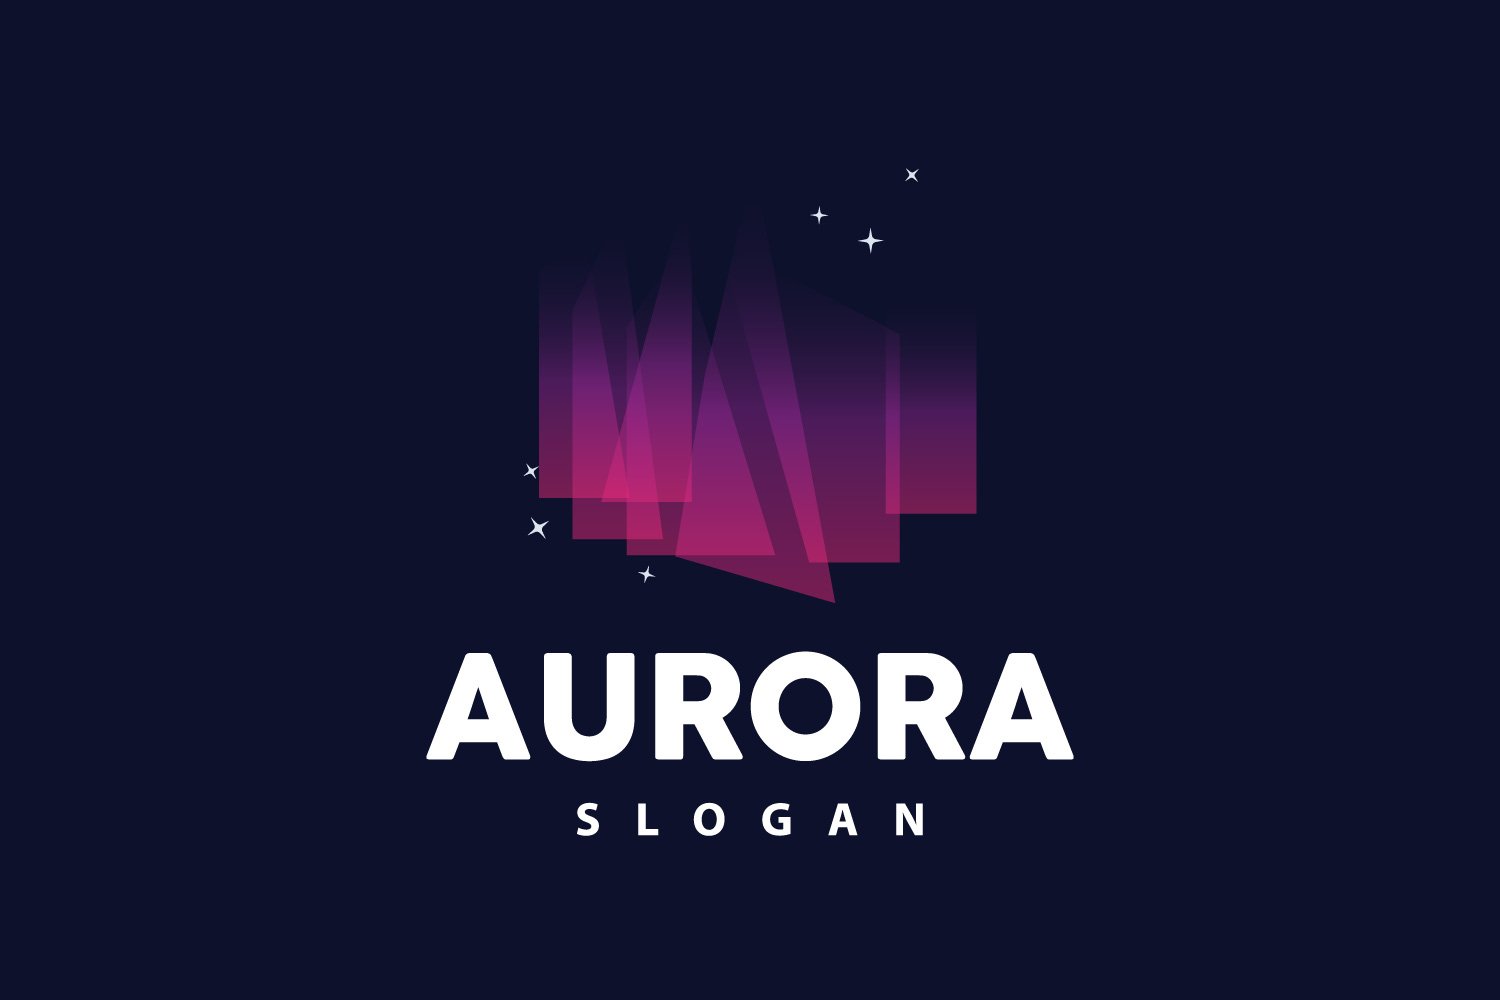 Aurora Light Wave Sky View LogoV4